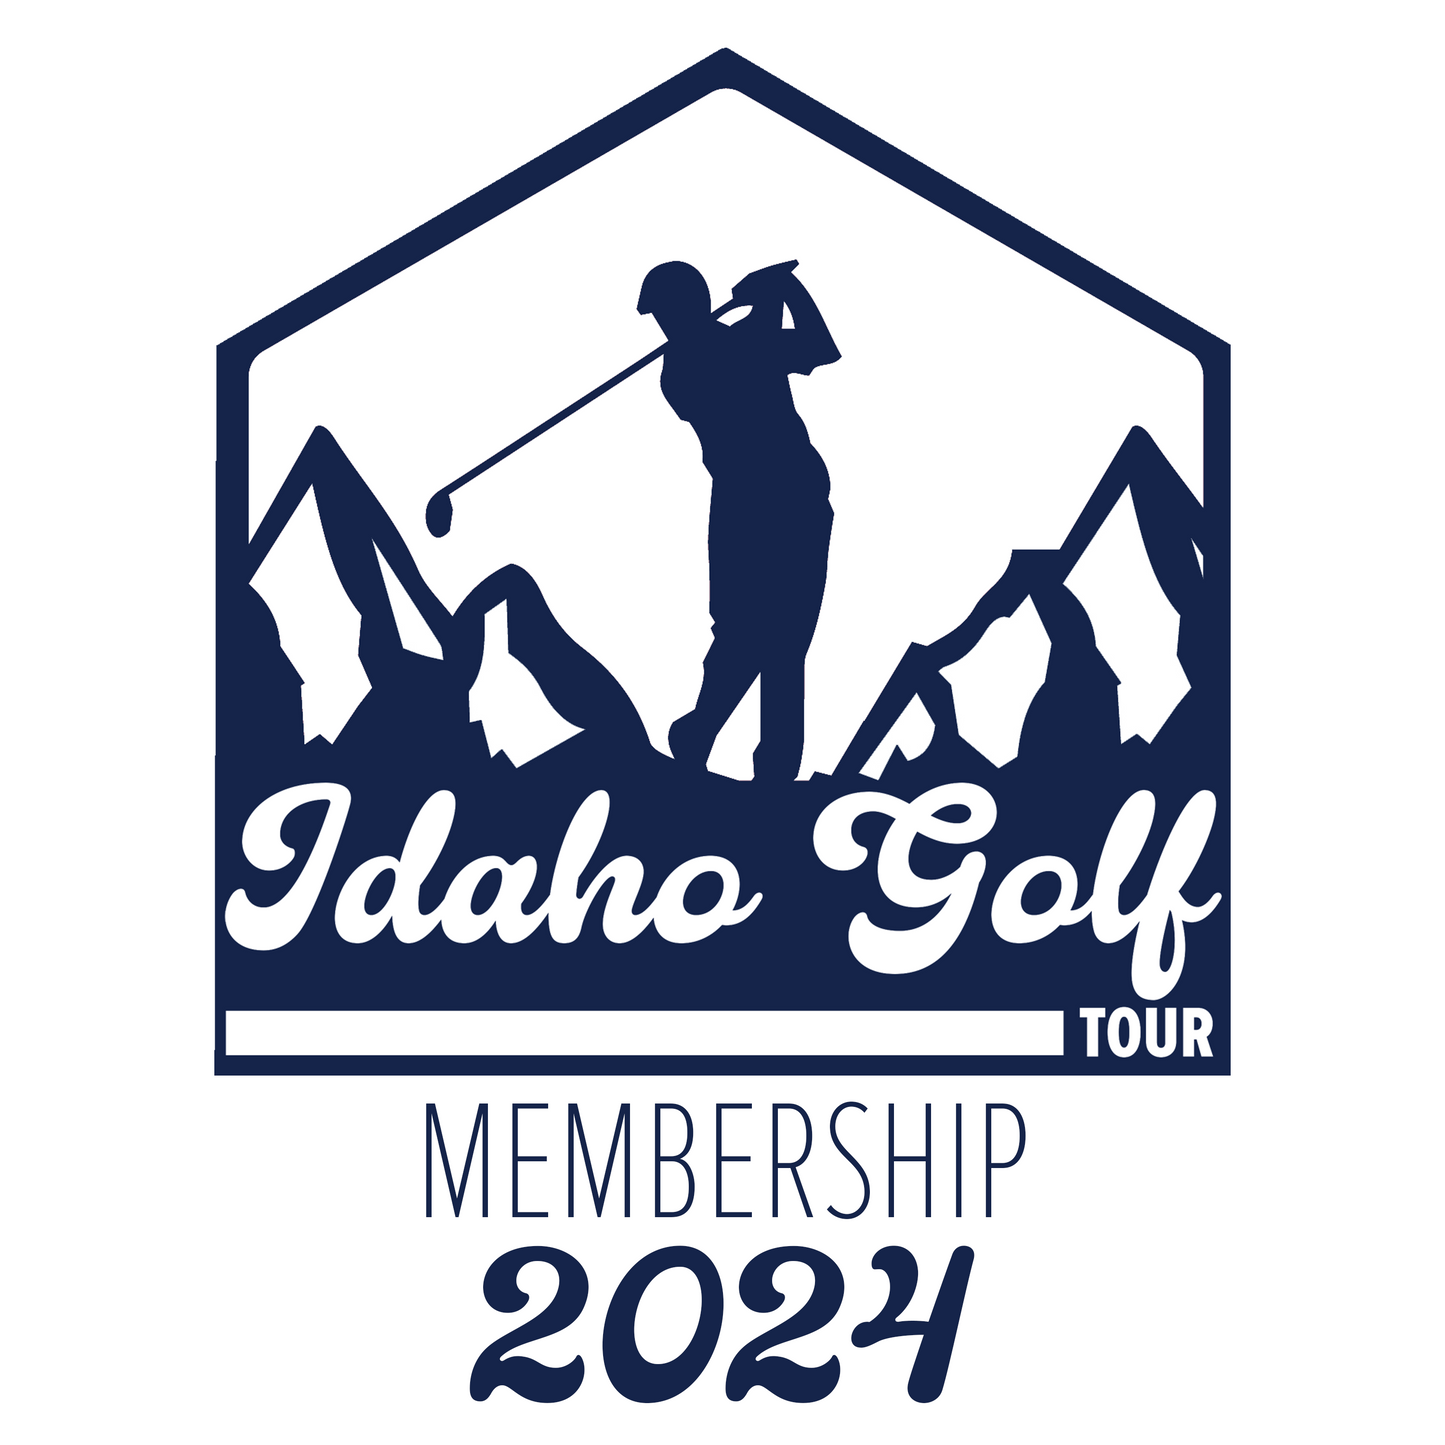 2024 Idaho Golf Tour Membership